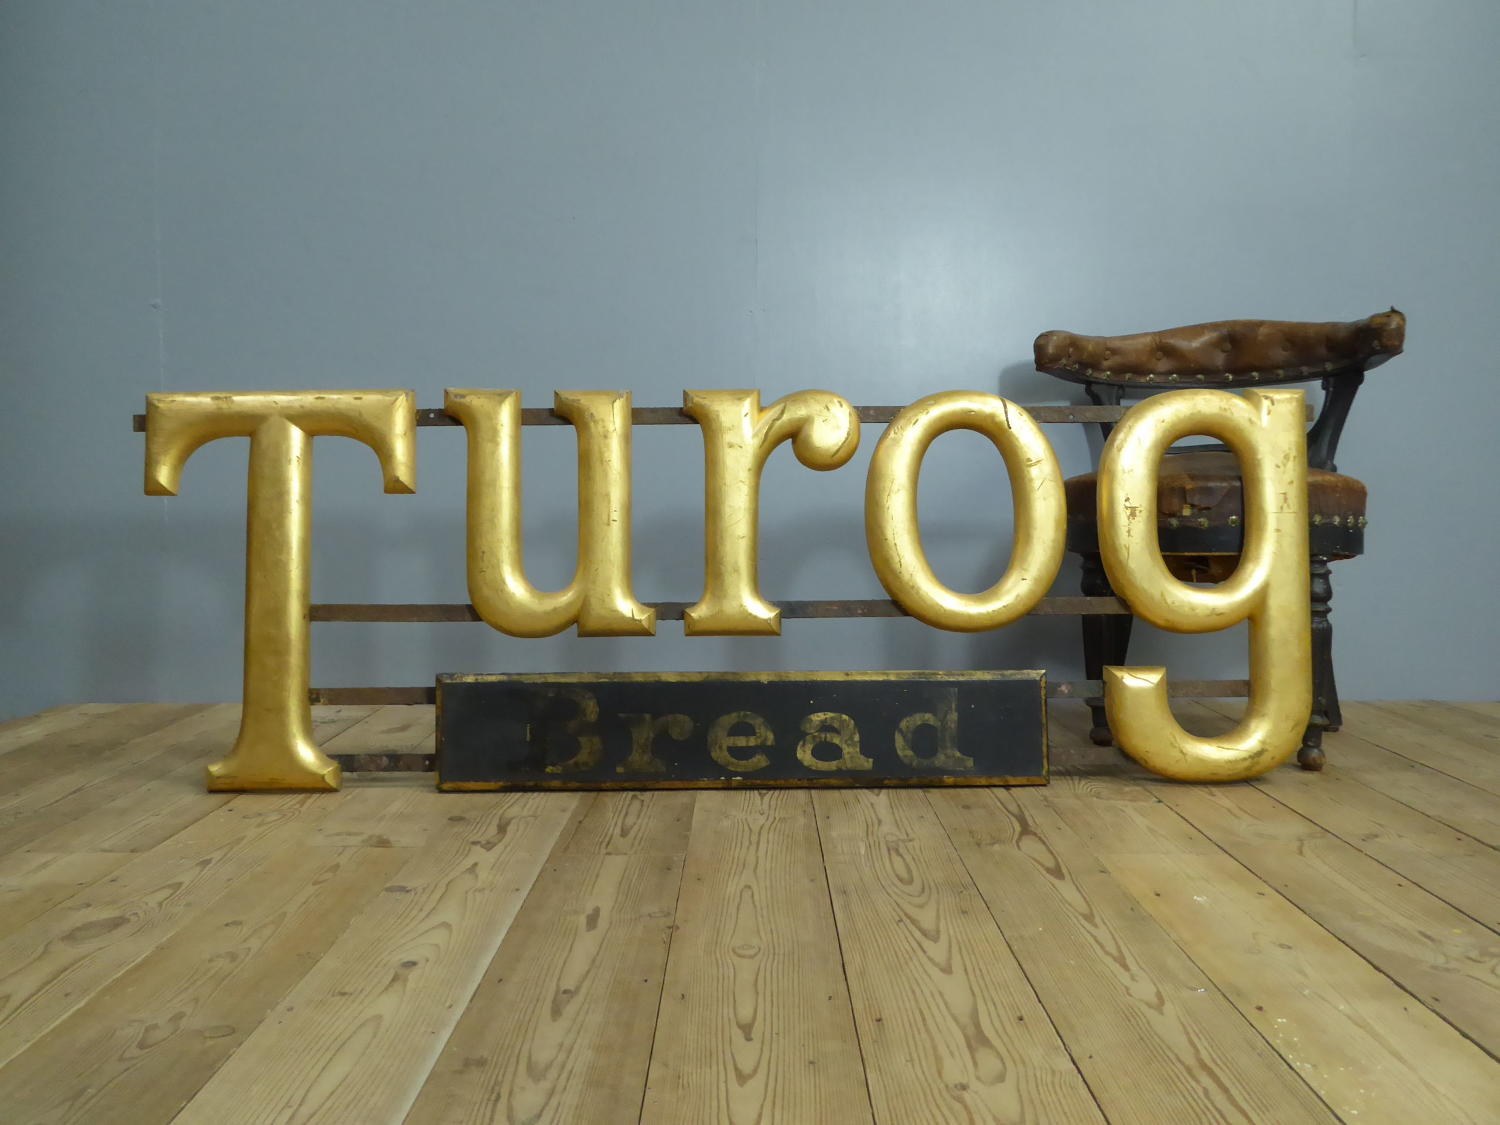 Huge Turog Bread Sign